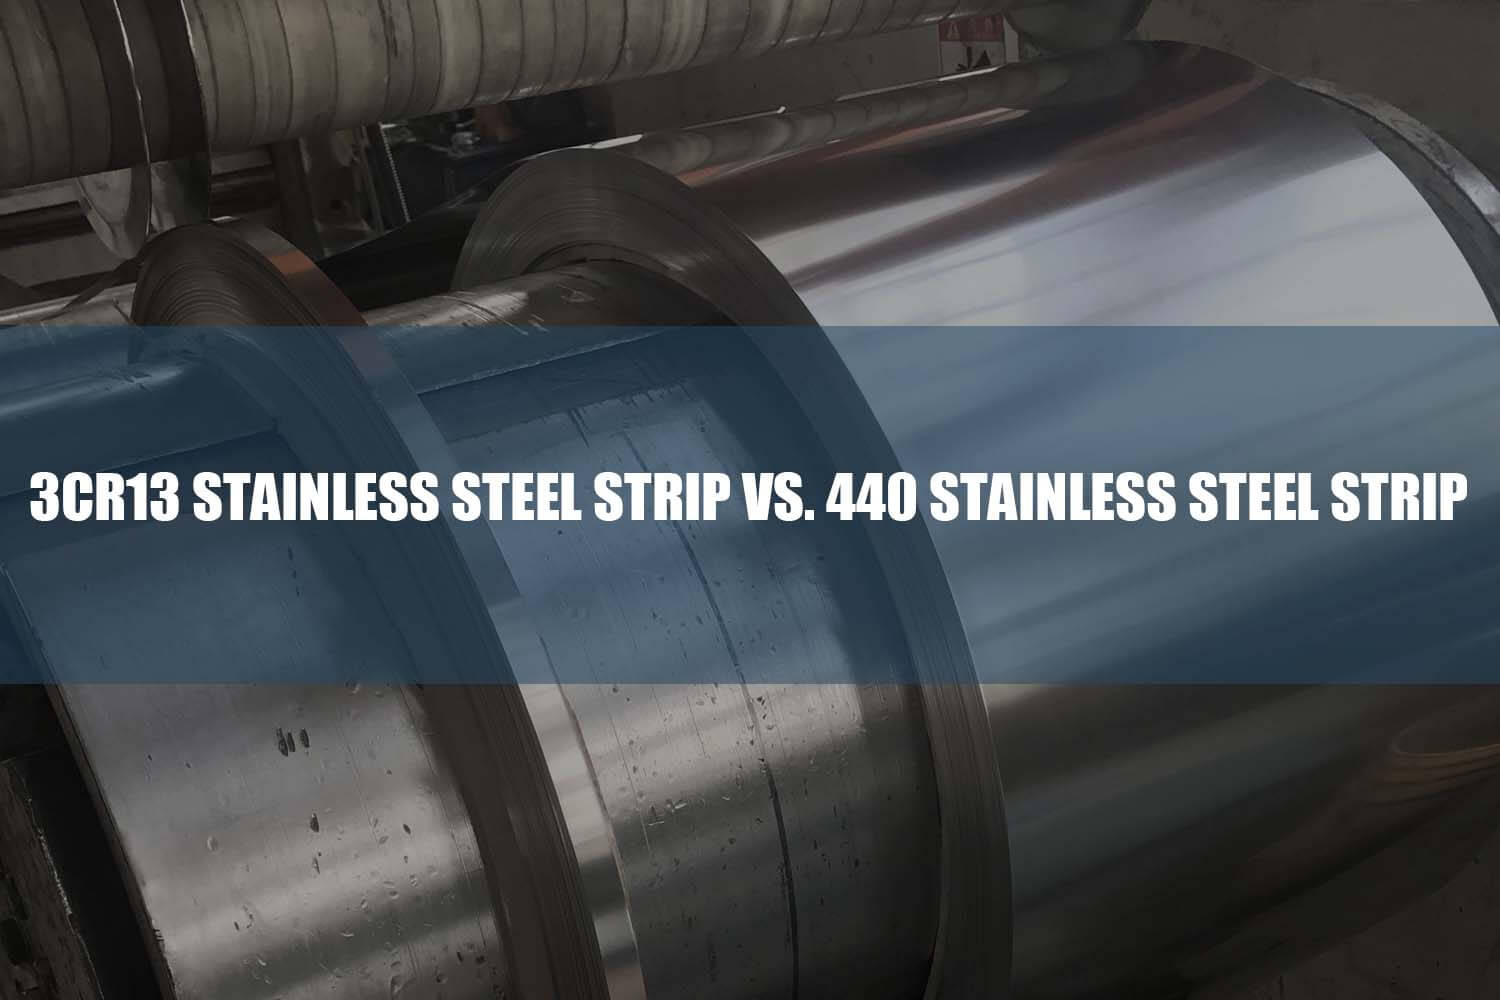 3cr13 stainless steel strip vs. 440 stainless steel strip